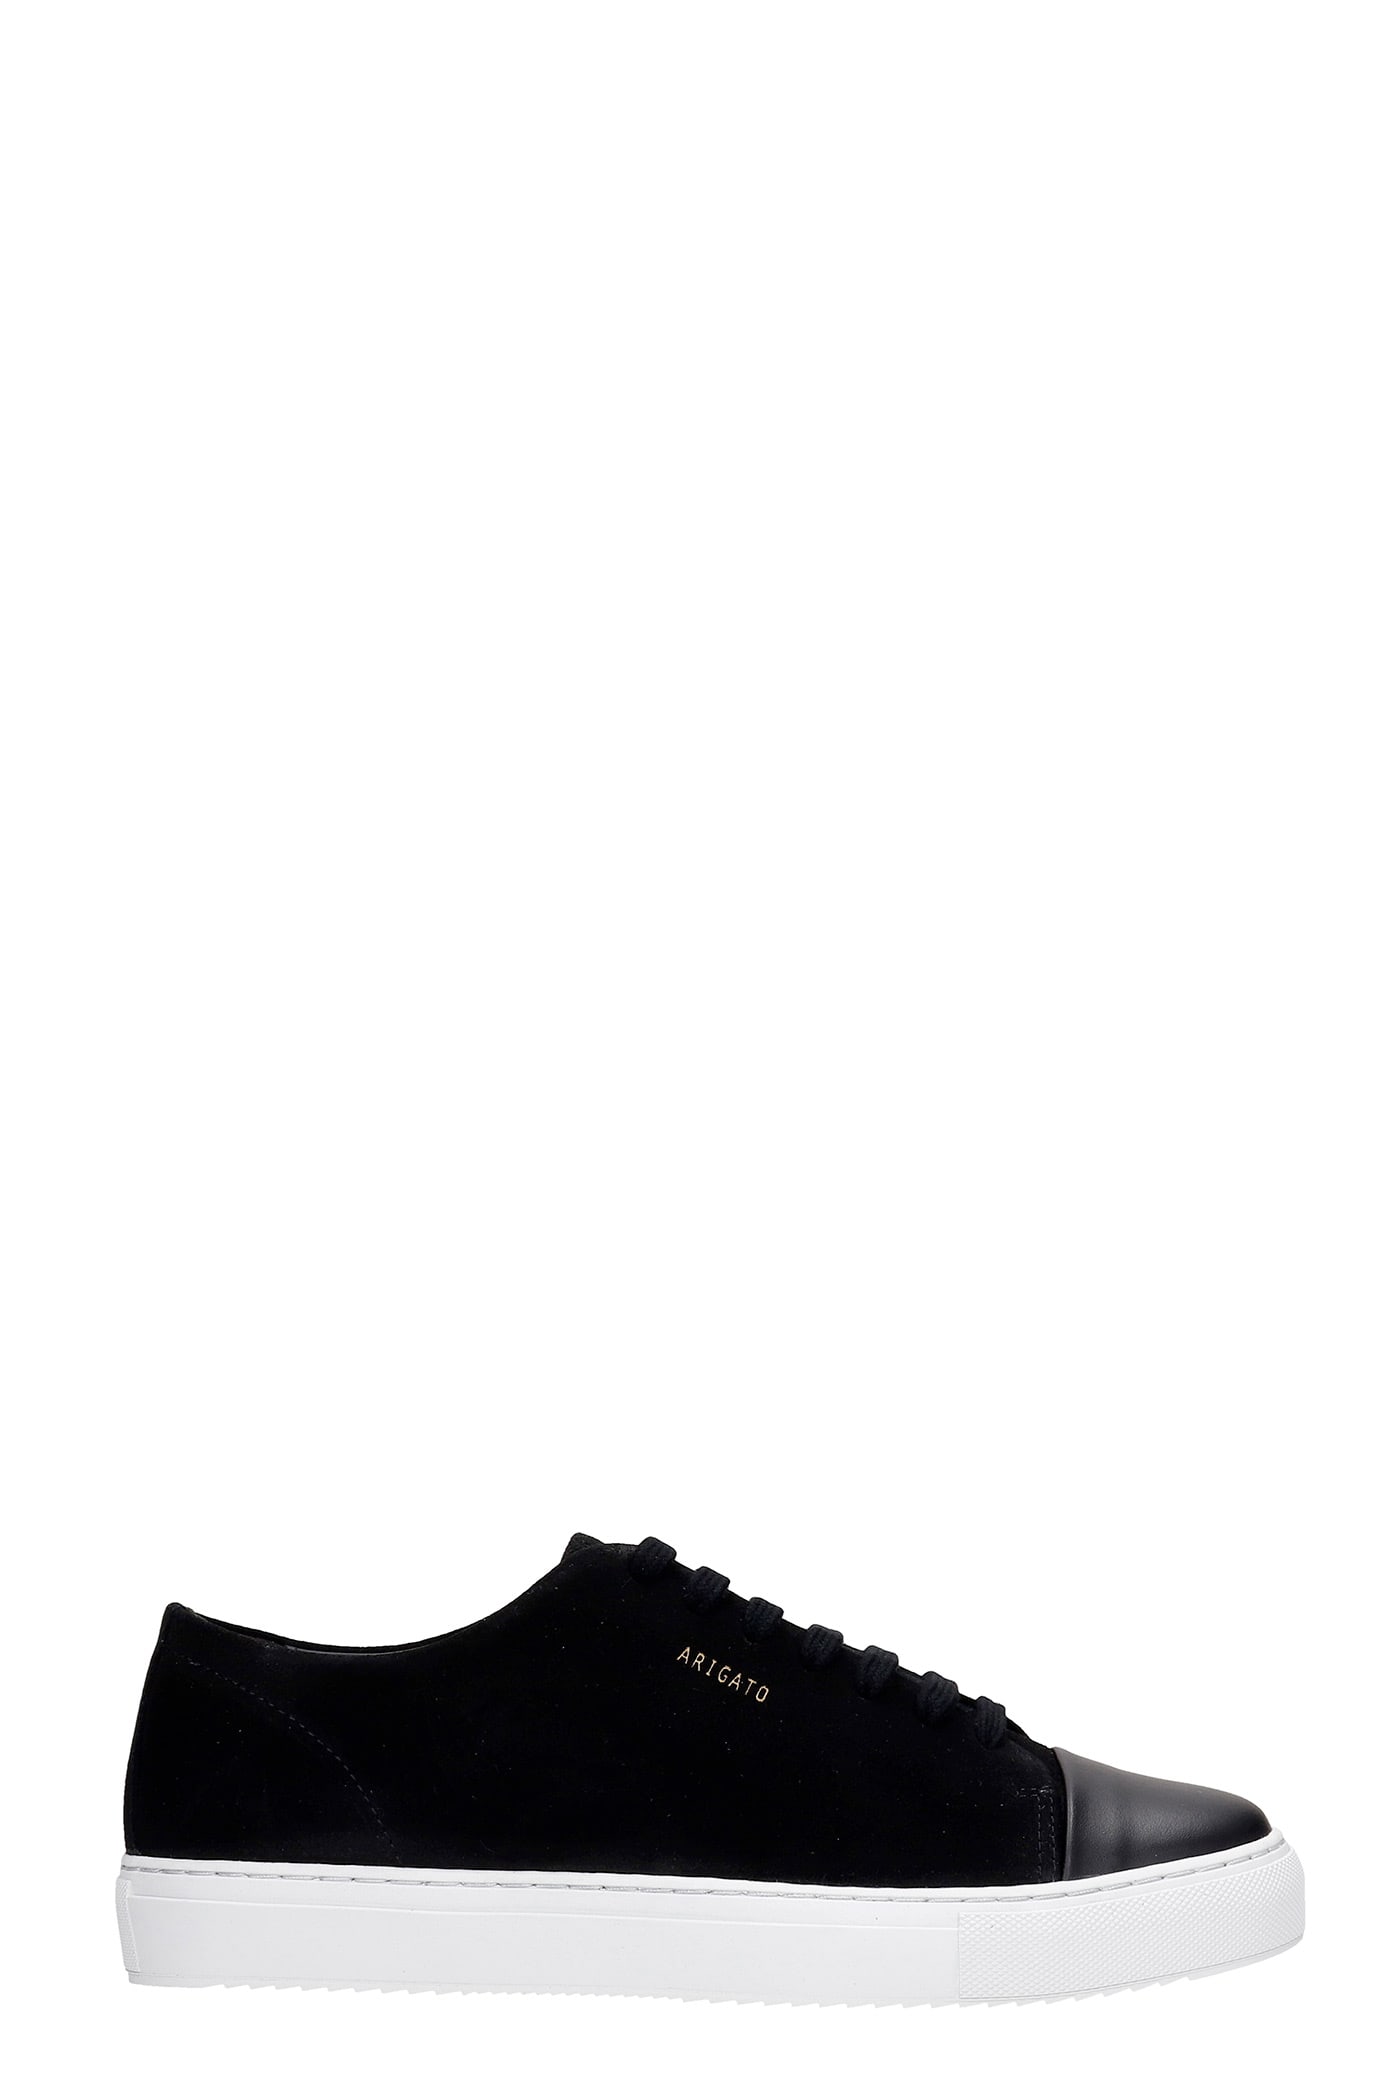 Axel Arigato Cap-toe Sneakers In Black Suede